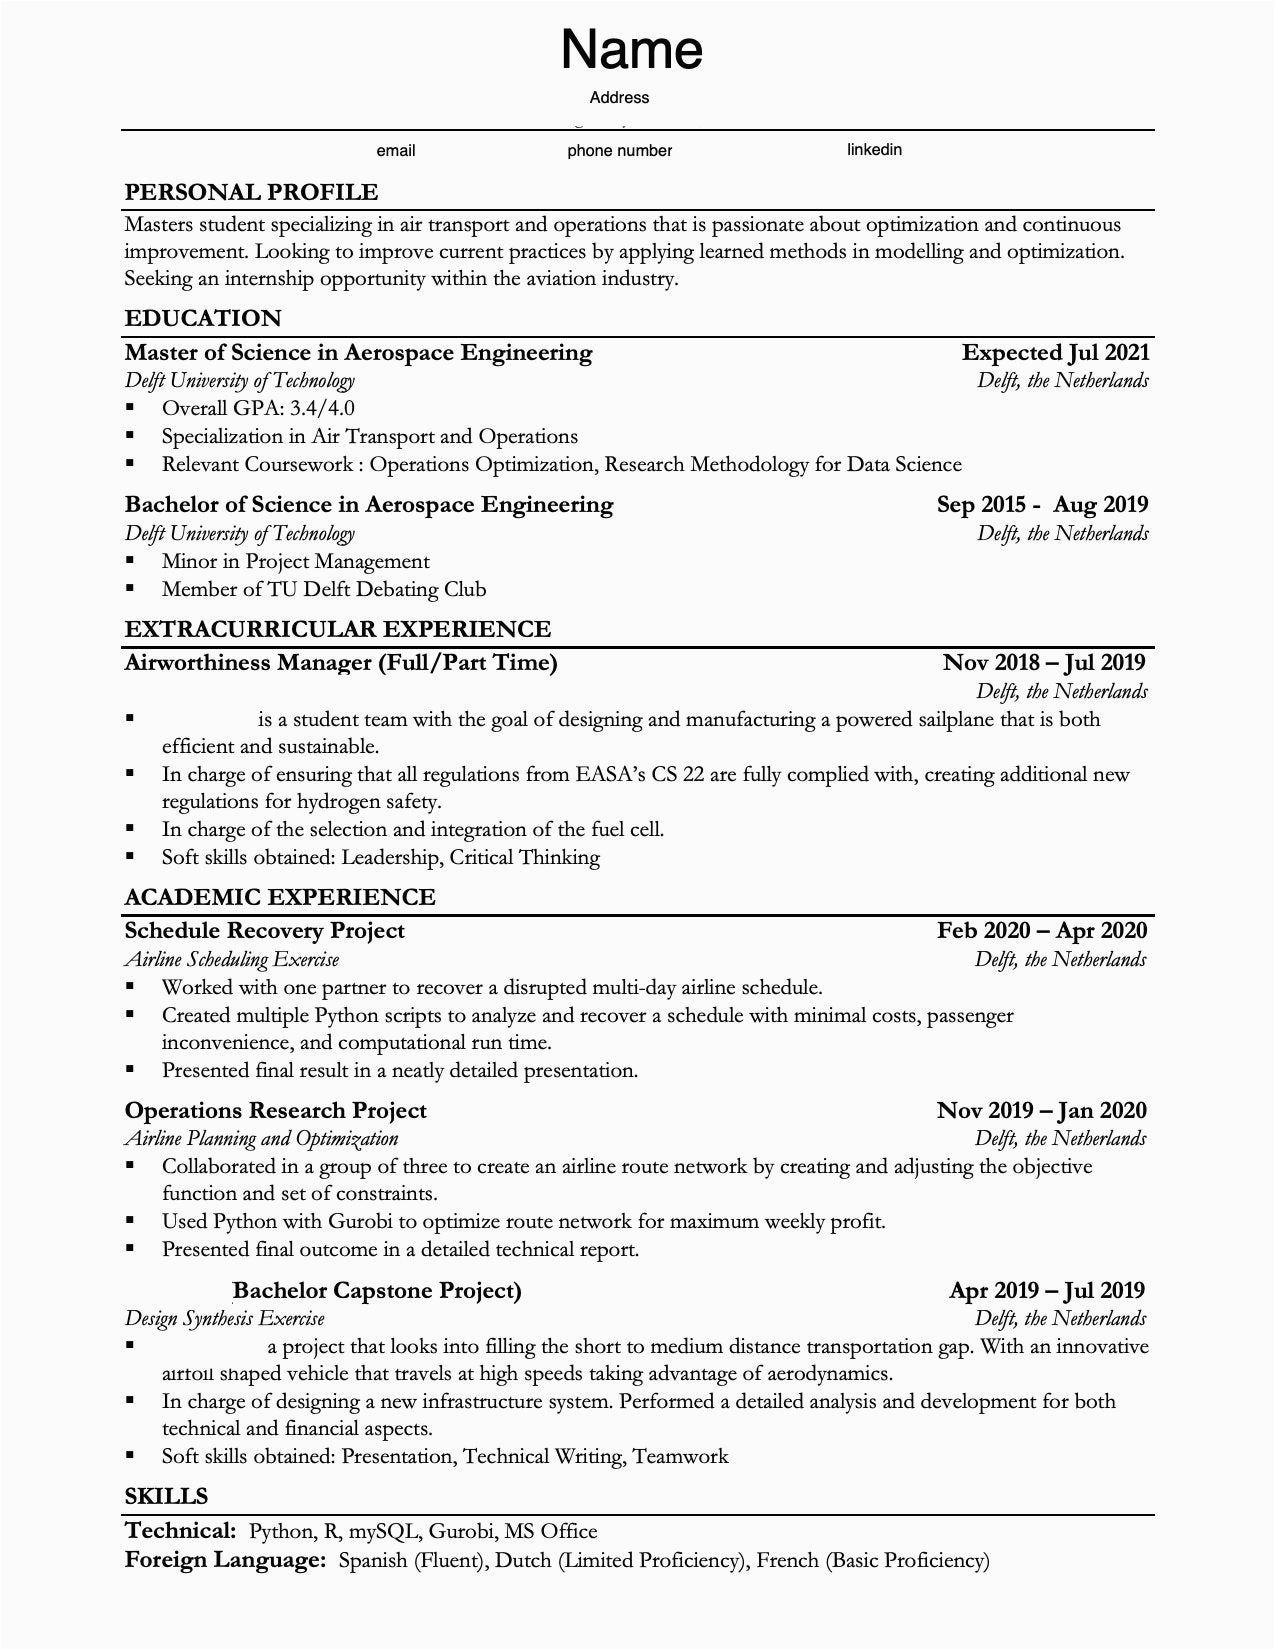 Sample Resume for High School Student Seeking Internship Current Master S Student Seeking An Internship Resumes